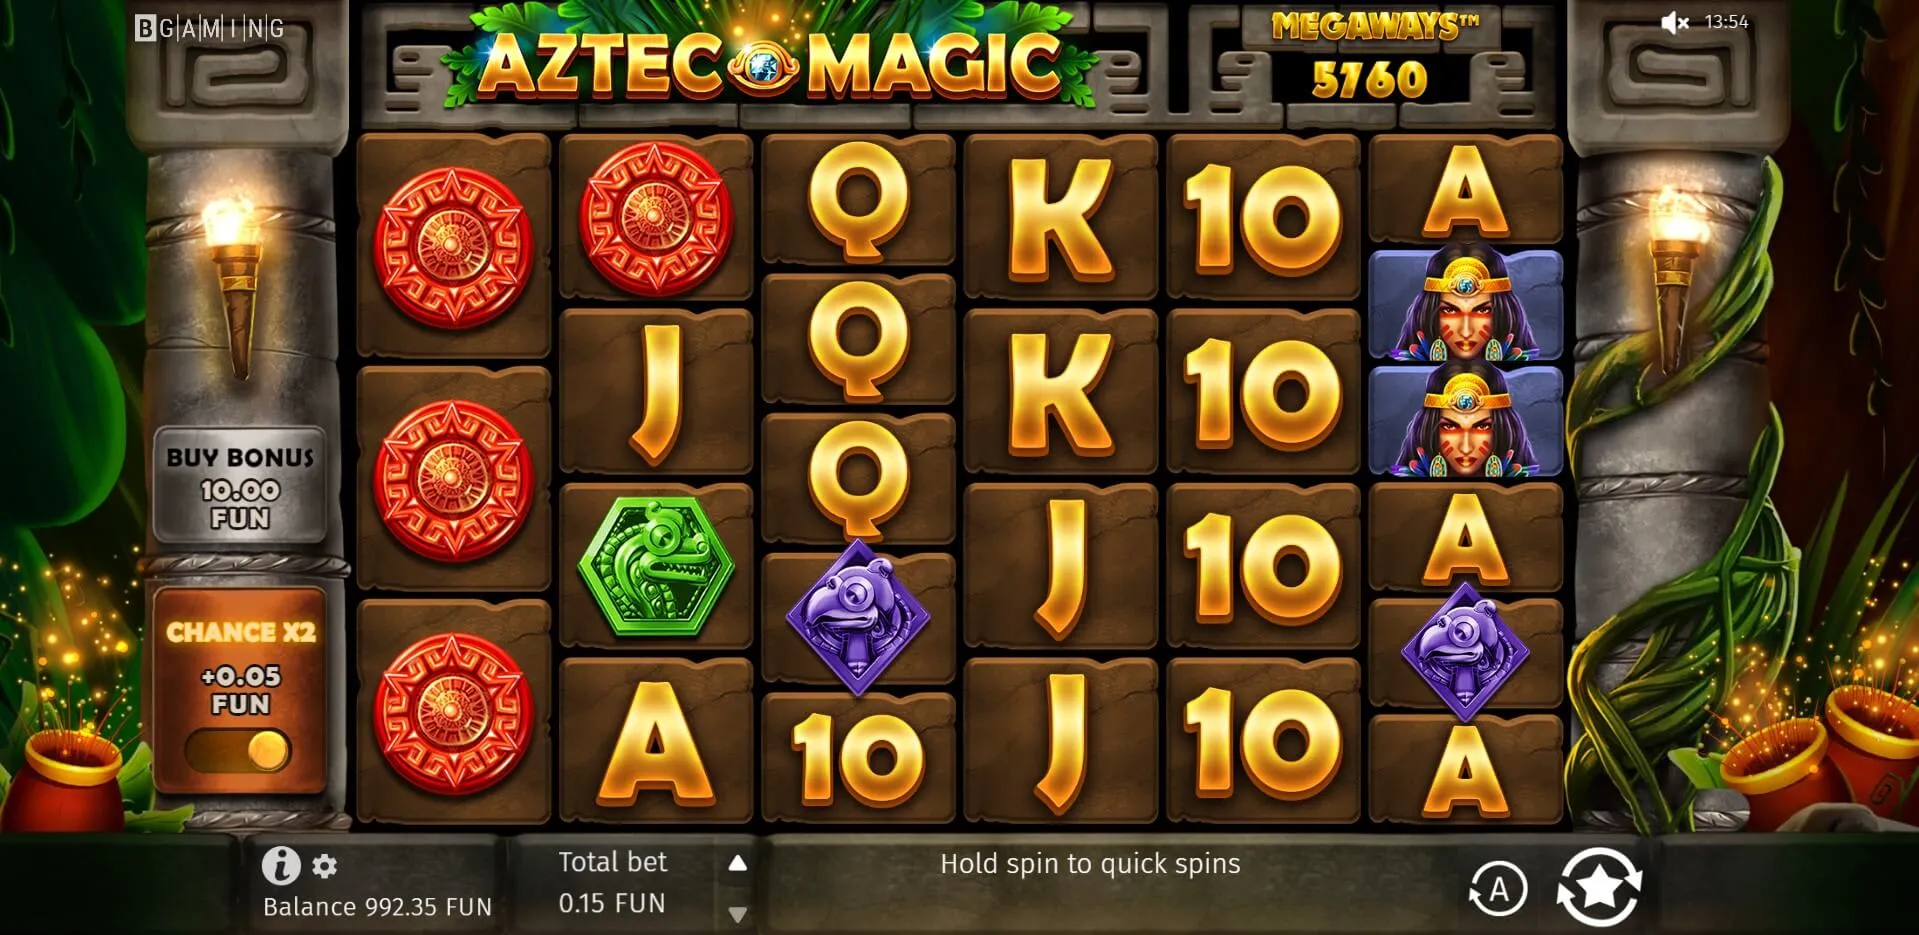 aztec magic megaways slot chance x2 feature